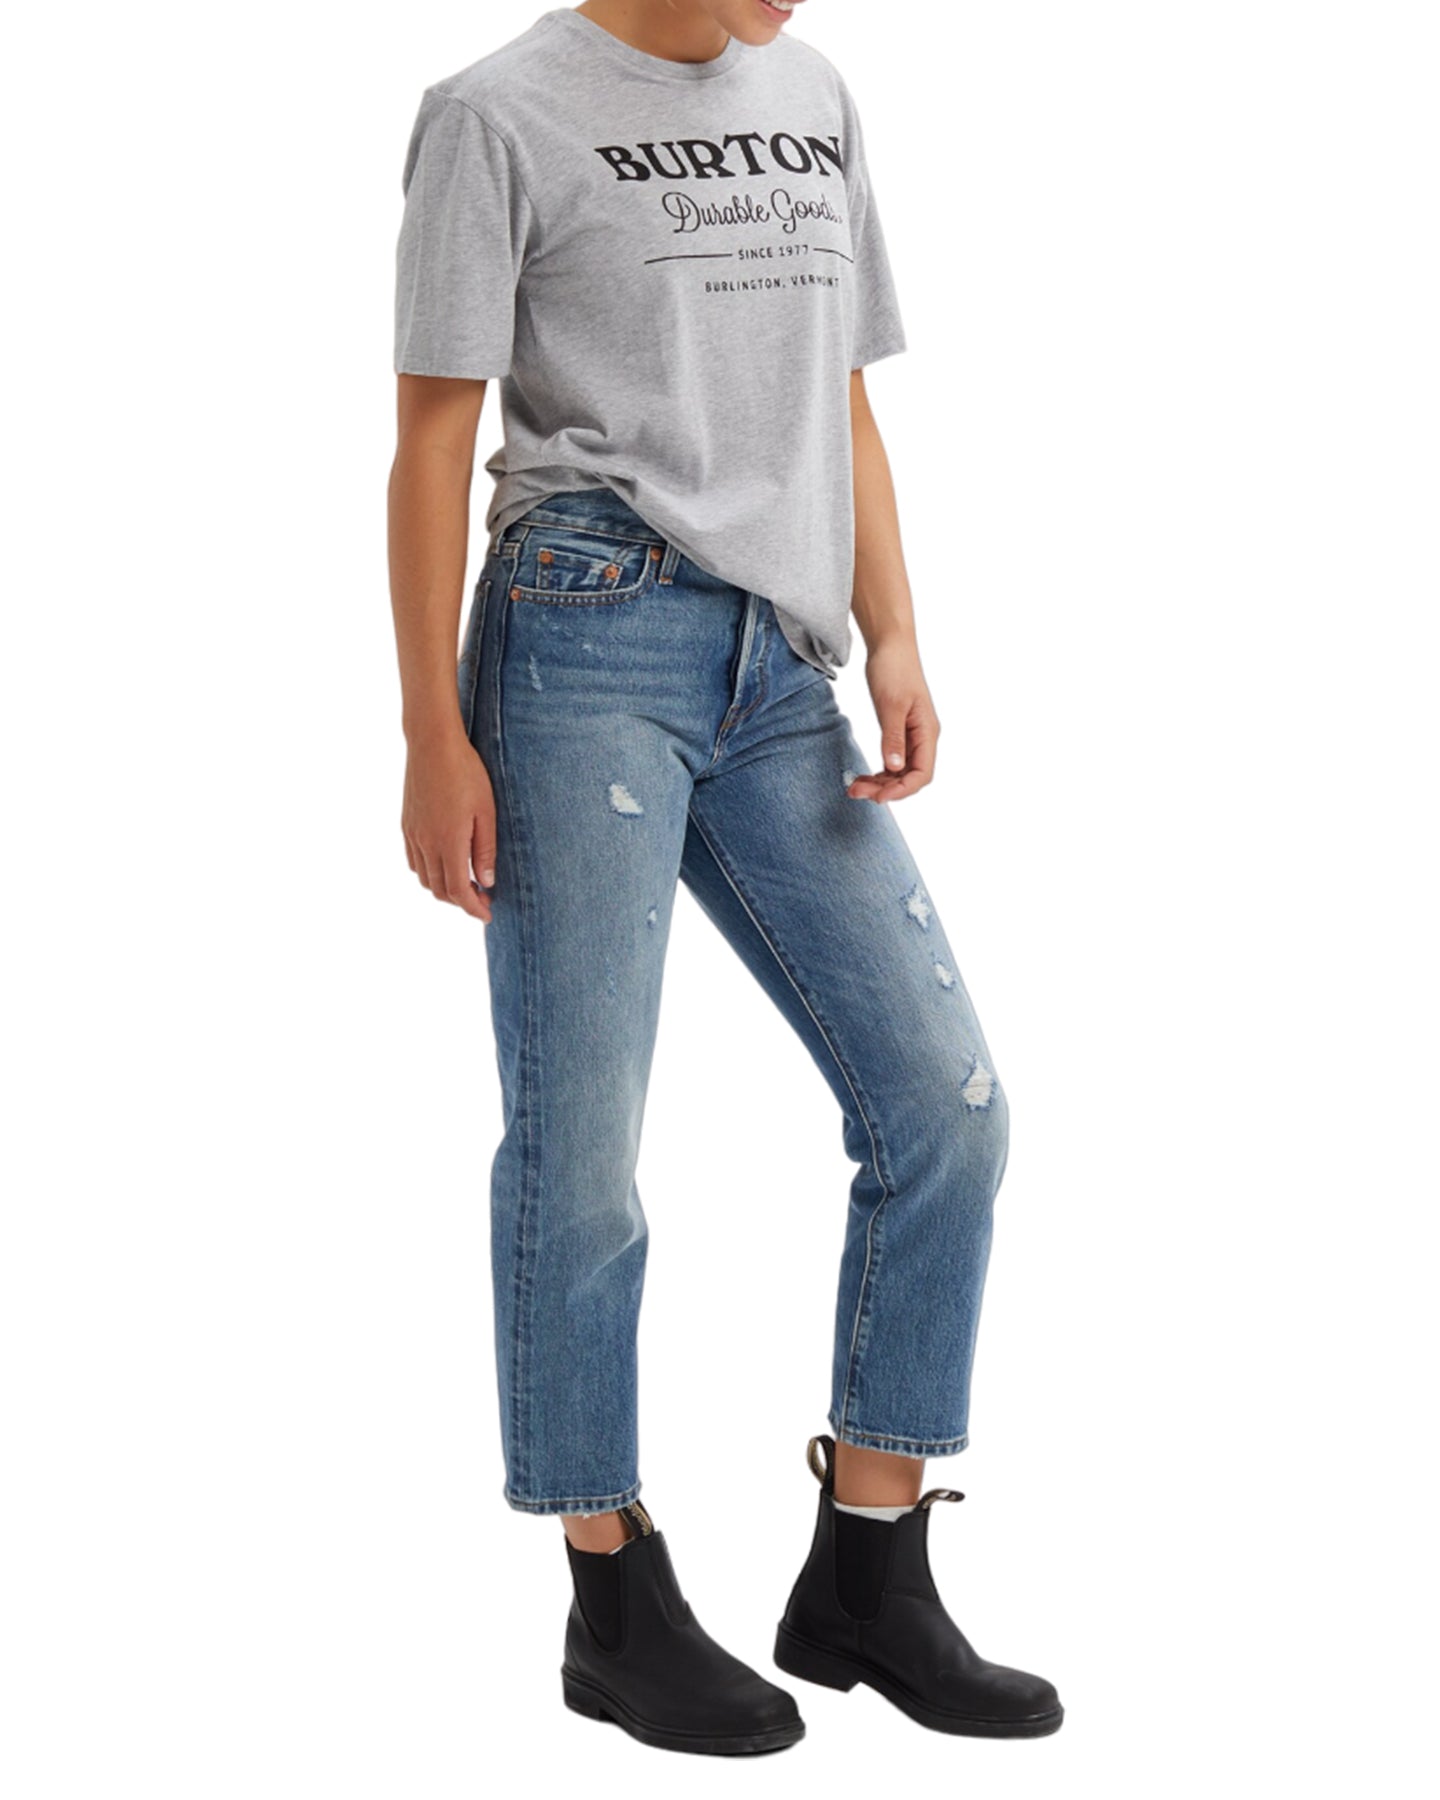 Burton Durable Goods Short Sleeve T-Shirt - Gray Heather Shirts & Tops - Trojan Wake Ski Snow